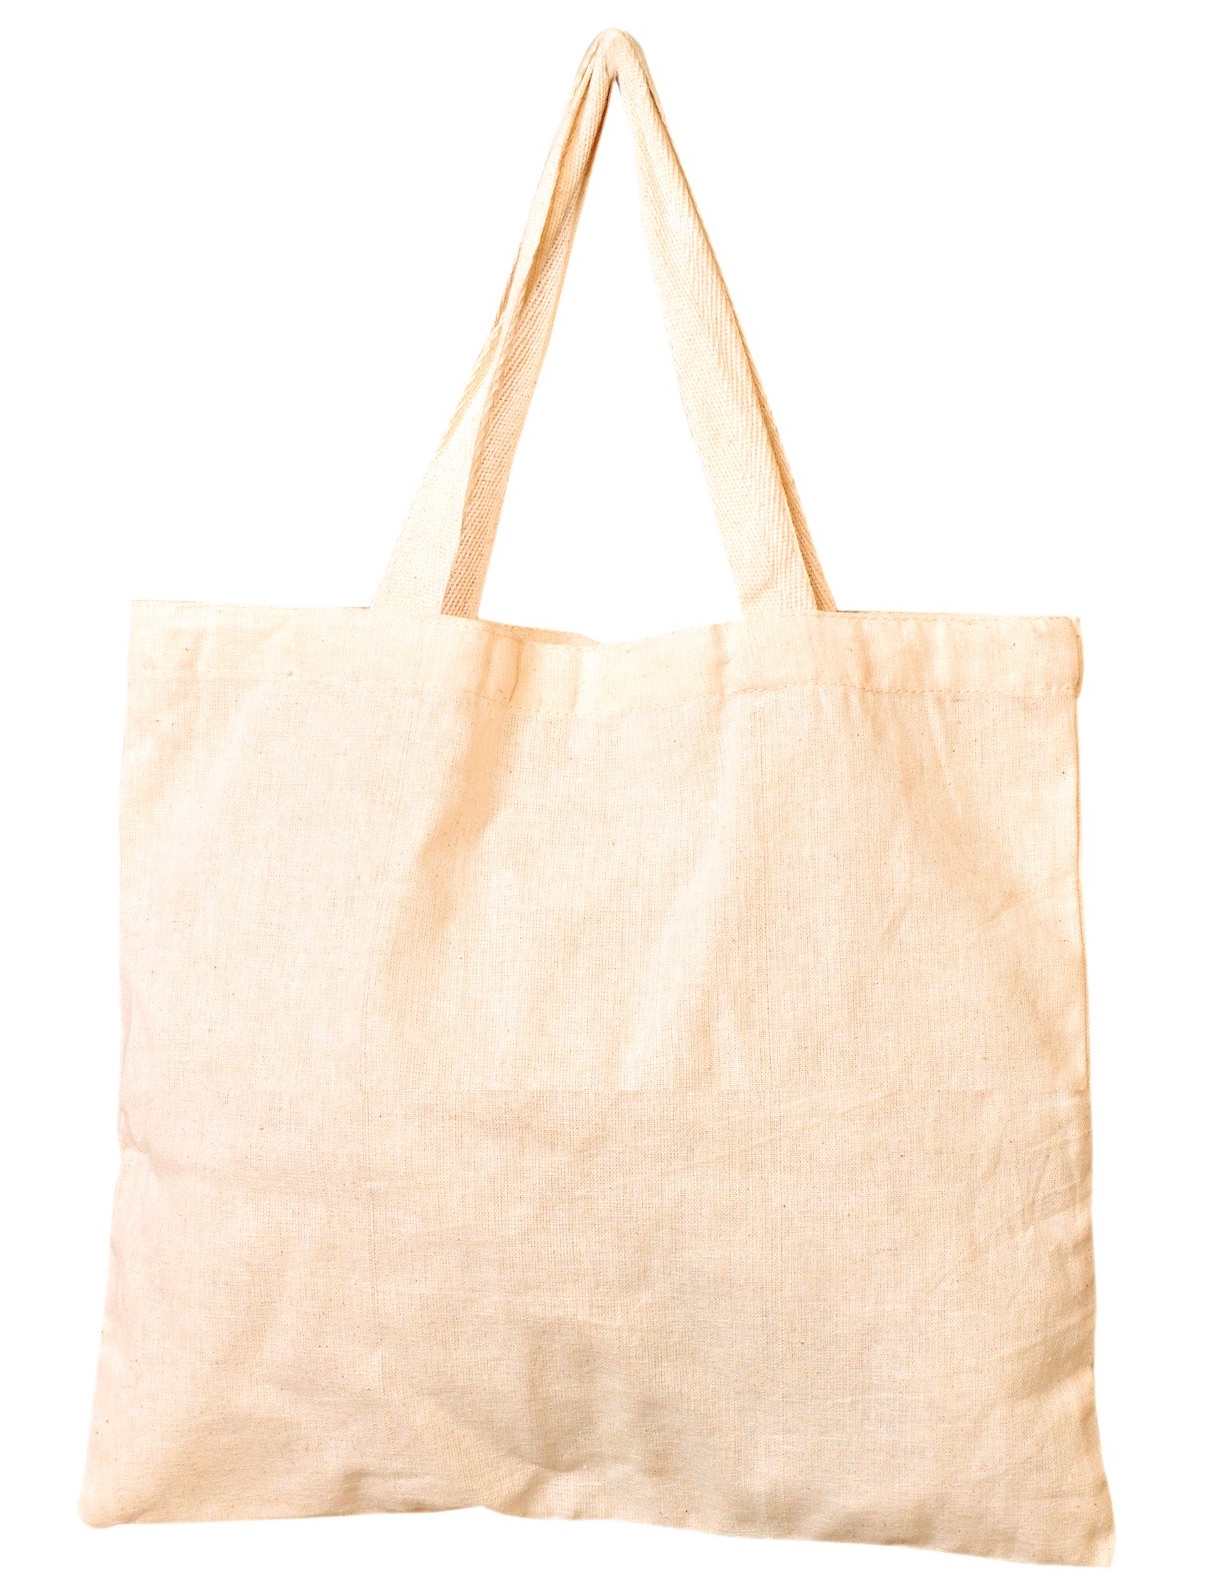 Hand painted fish cotton bag - Necessity eStore - 100% Ecofriendly Item